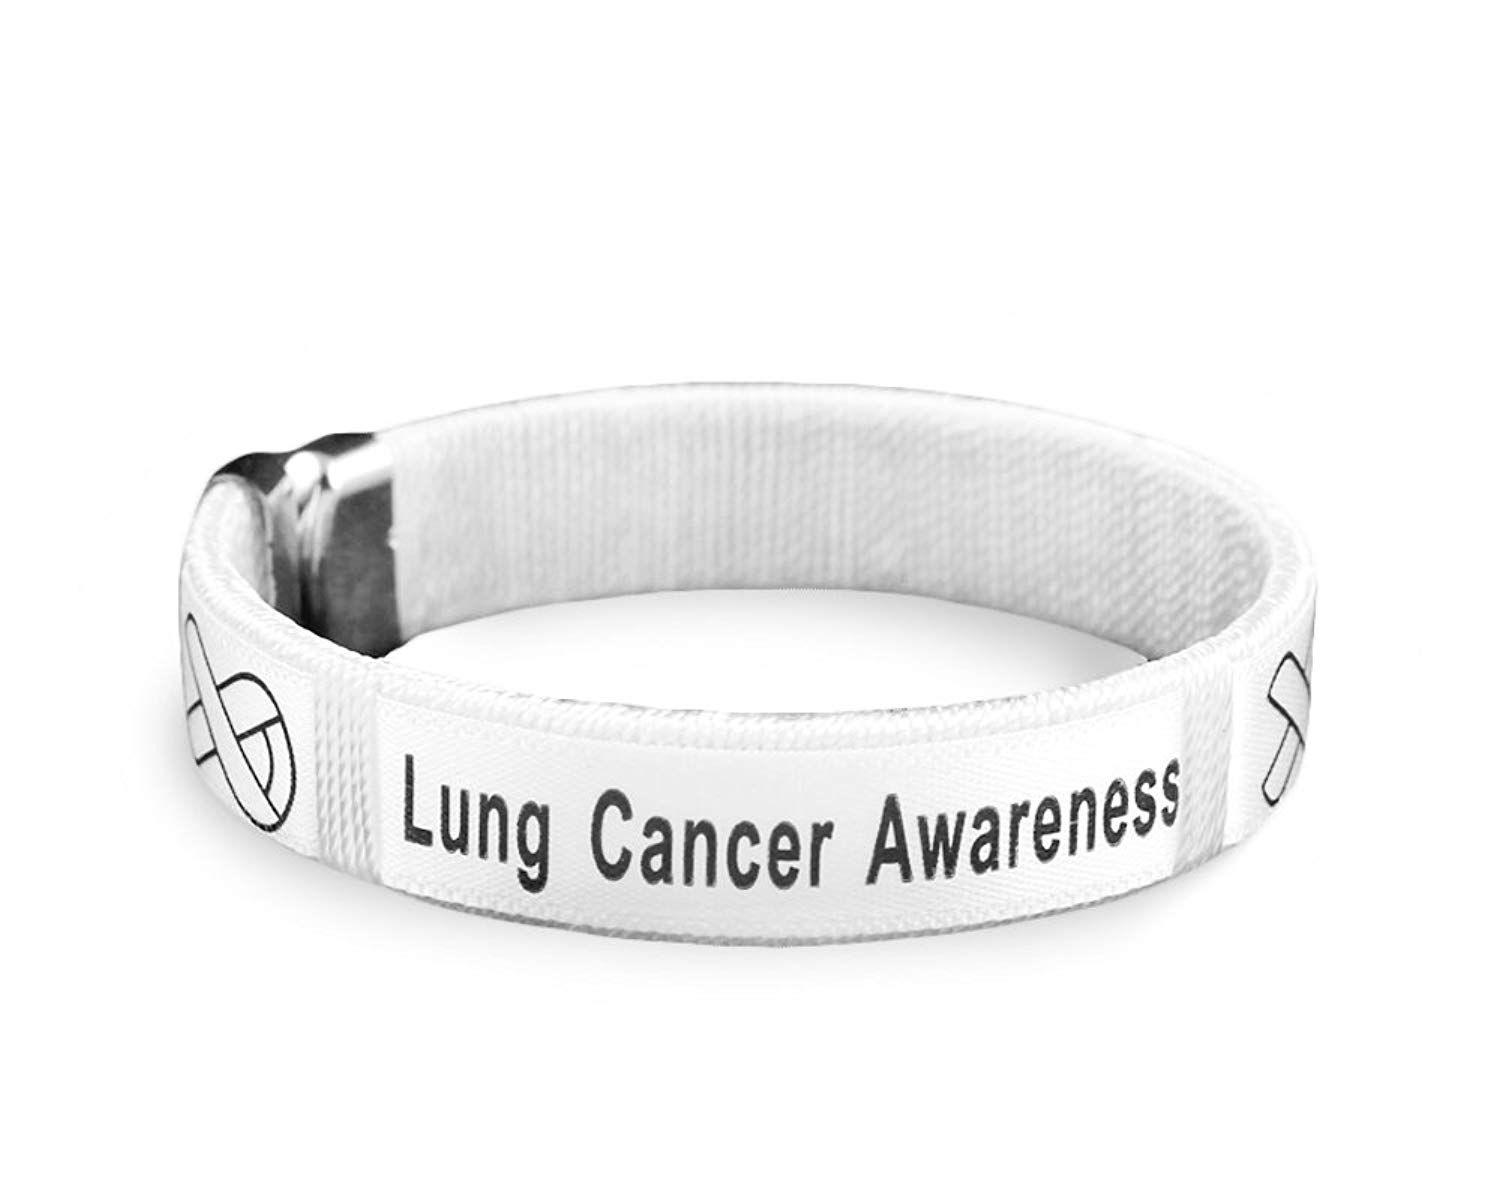 Cancer Awareness Bracelet, For Showing Support or